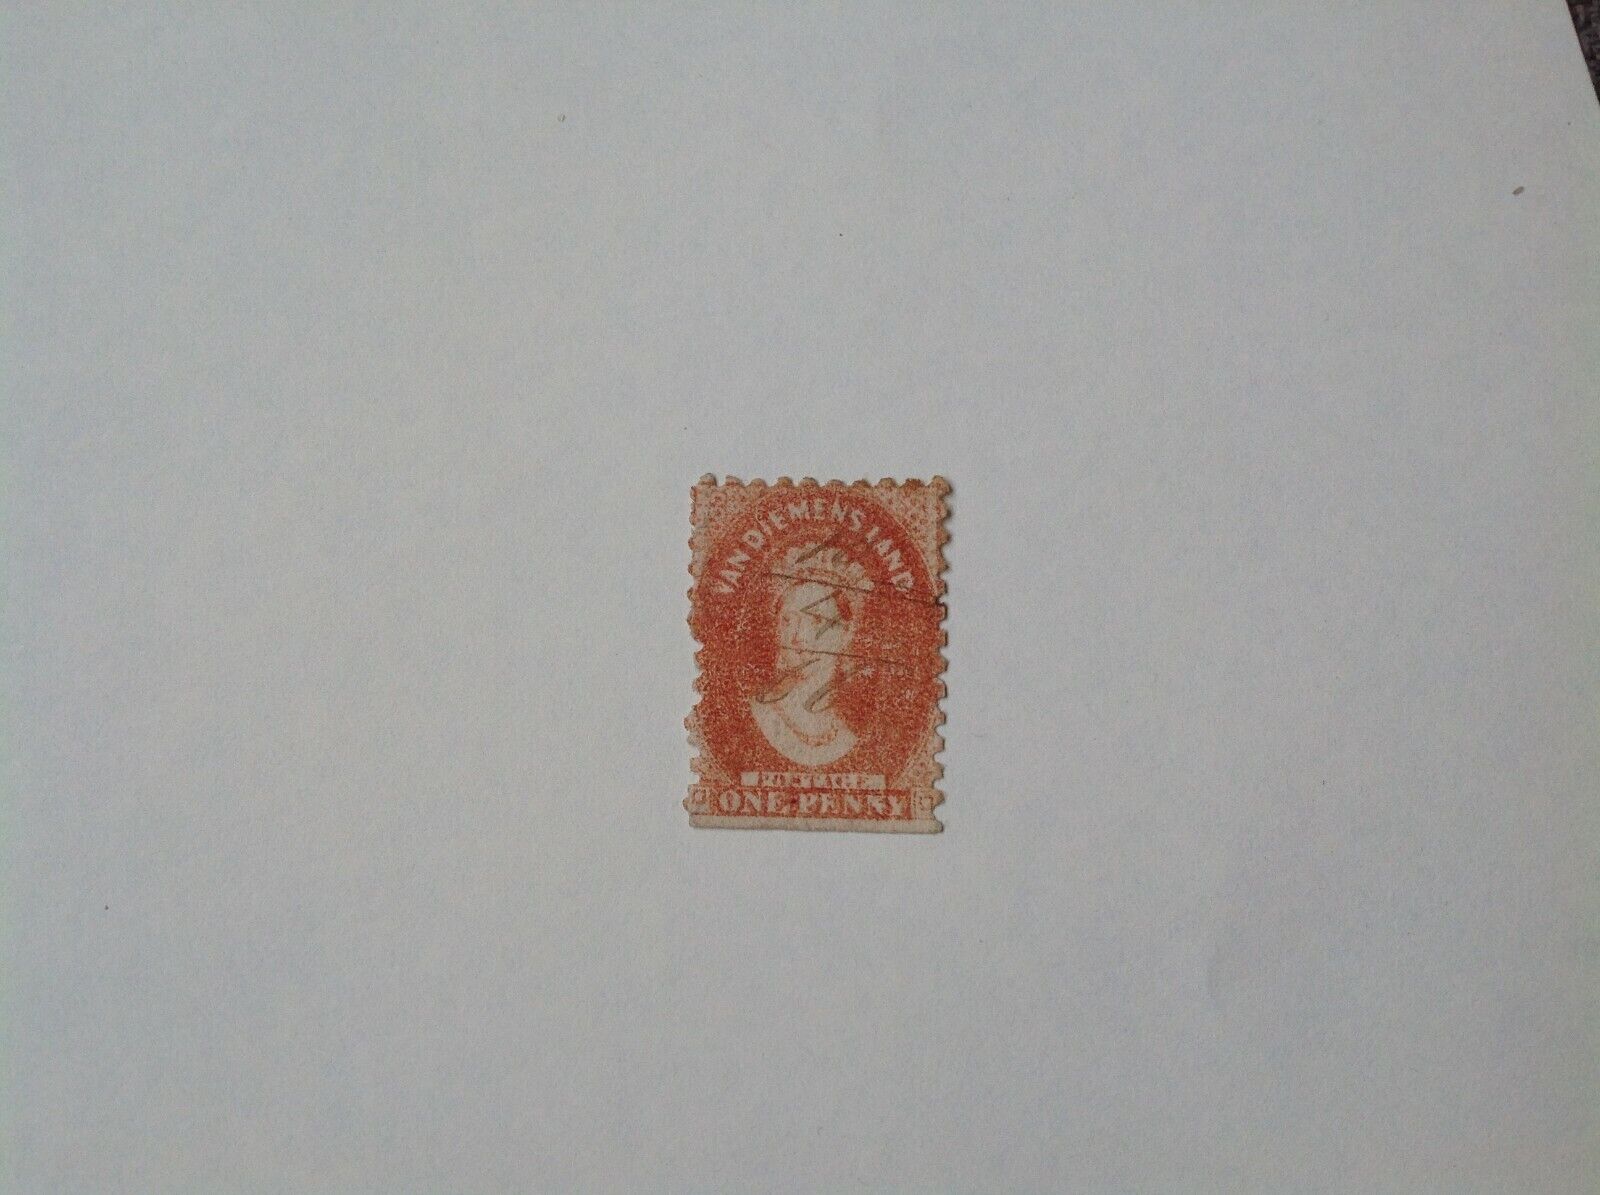 Tasmania (Van Diemansland) 1d red per,hand date cancelled 10/4/1866 bottom posit